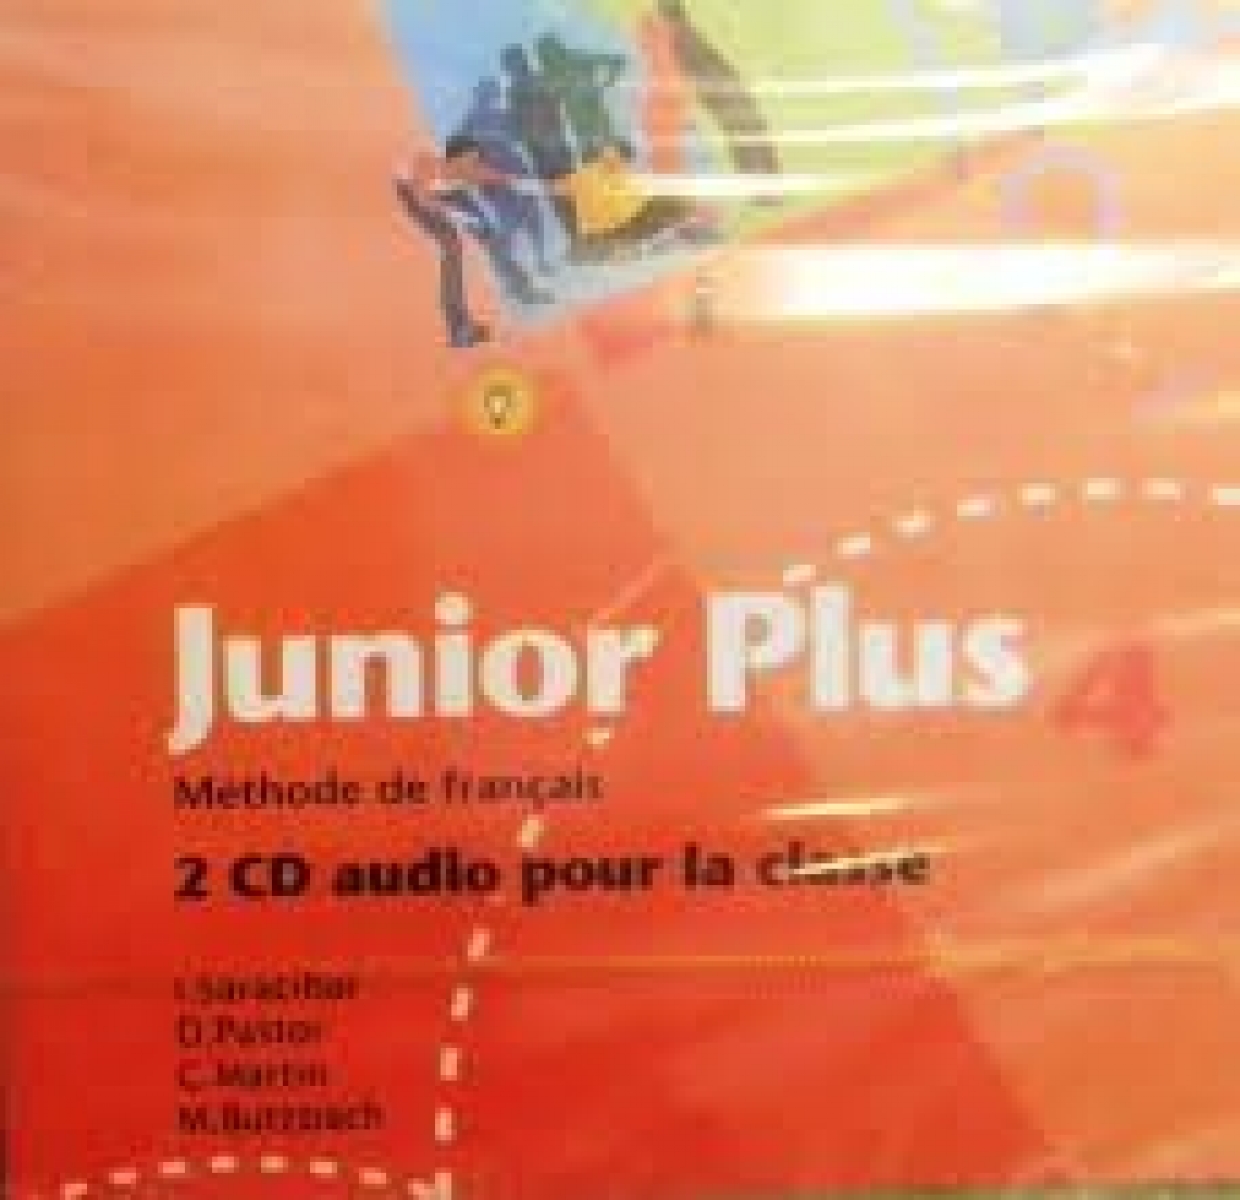 Michele Butzbach, Carmen Martin, Dolores Pastor, Inmaculada Saracibar Junior Plus 4 - 2 CD audio collectifs (Лицензия) 